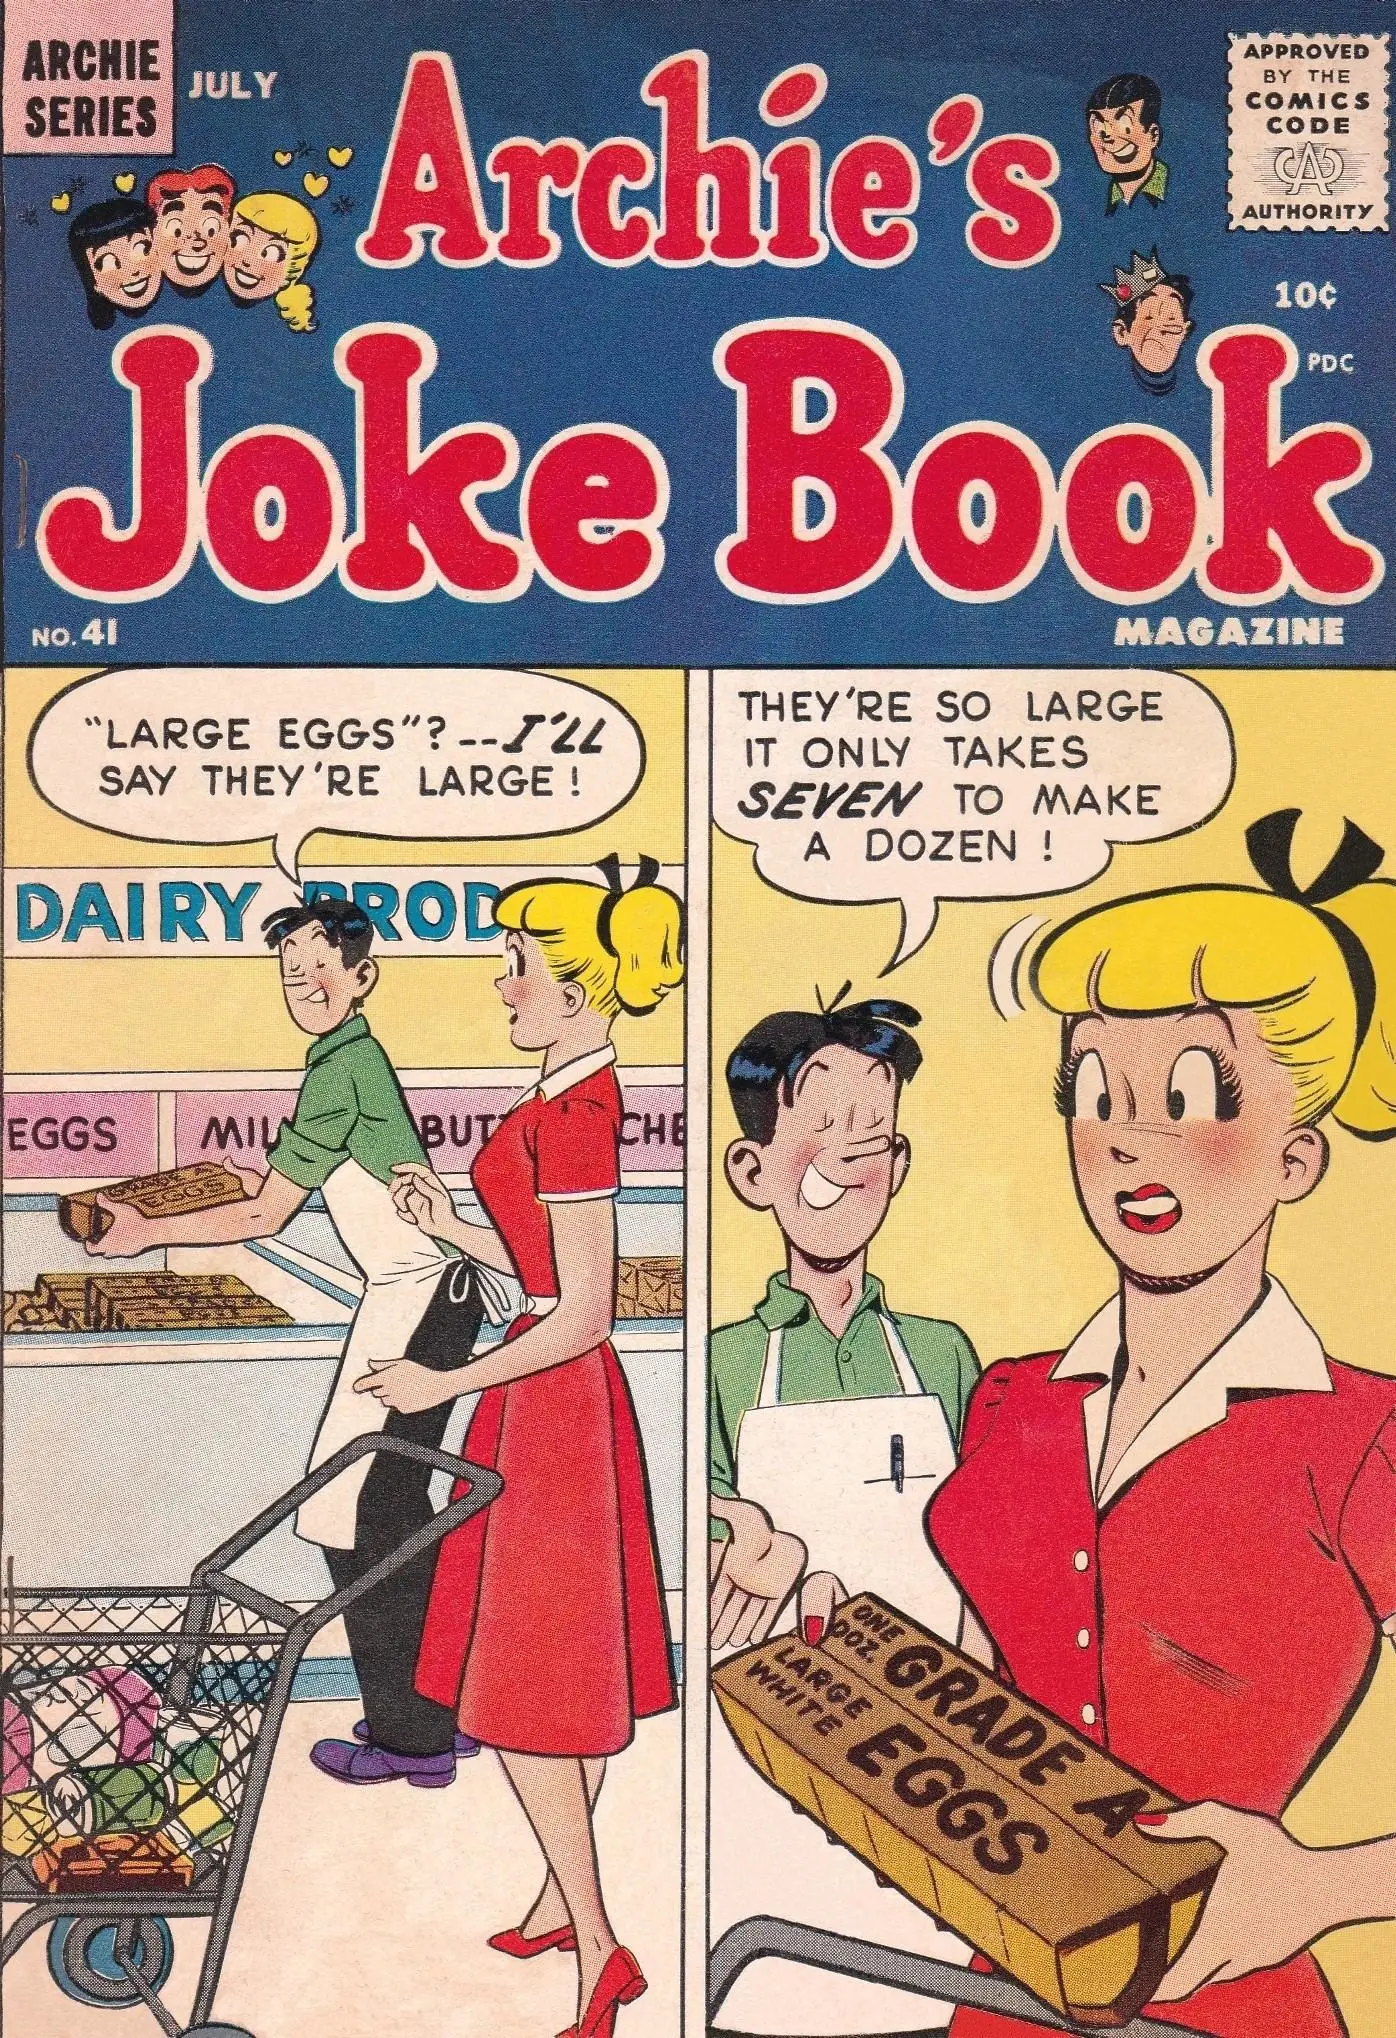 C joke. Joke book. Jokes Magazine. July 1959. Series Magazine 41.